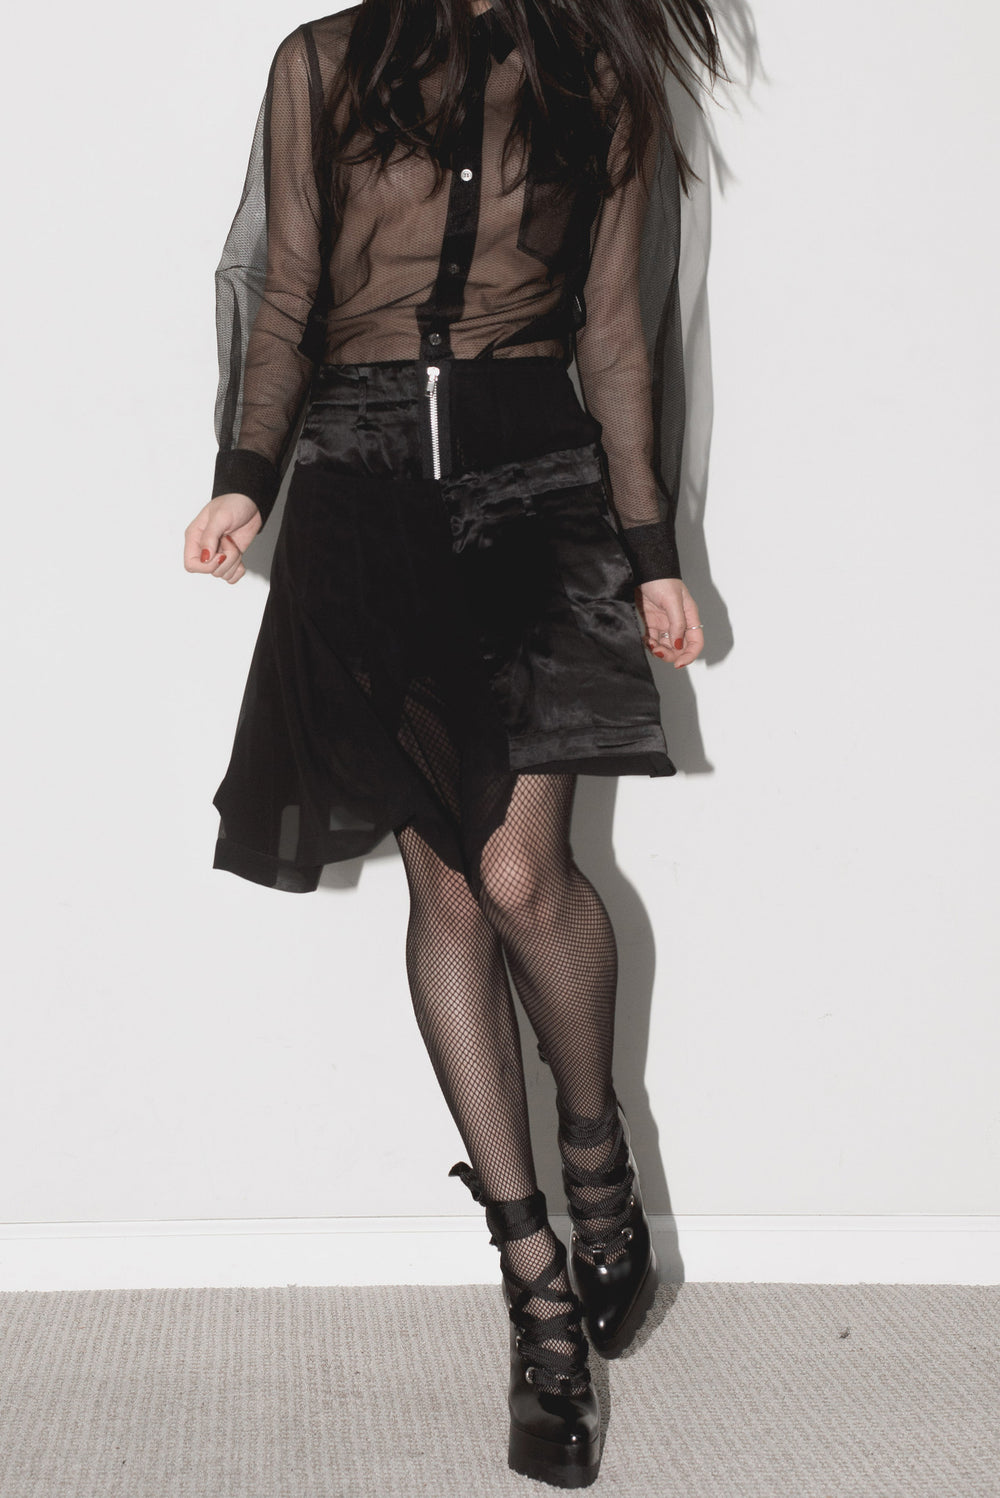 Junya Watanabe 2007 Hybrid Deconstructed Skirt